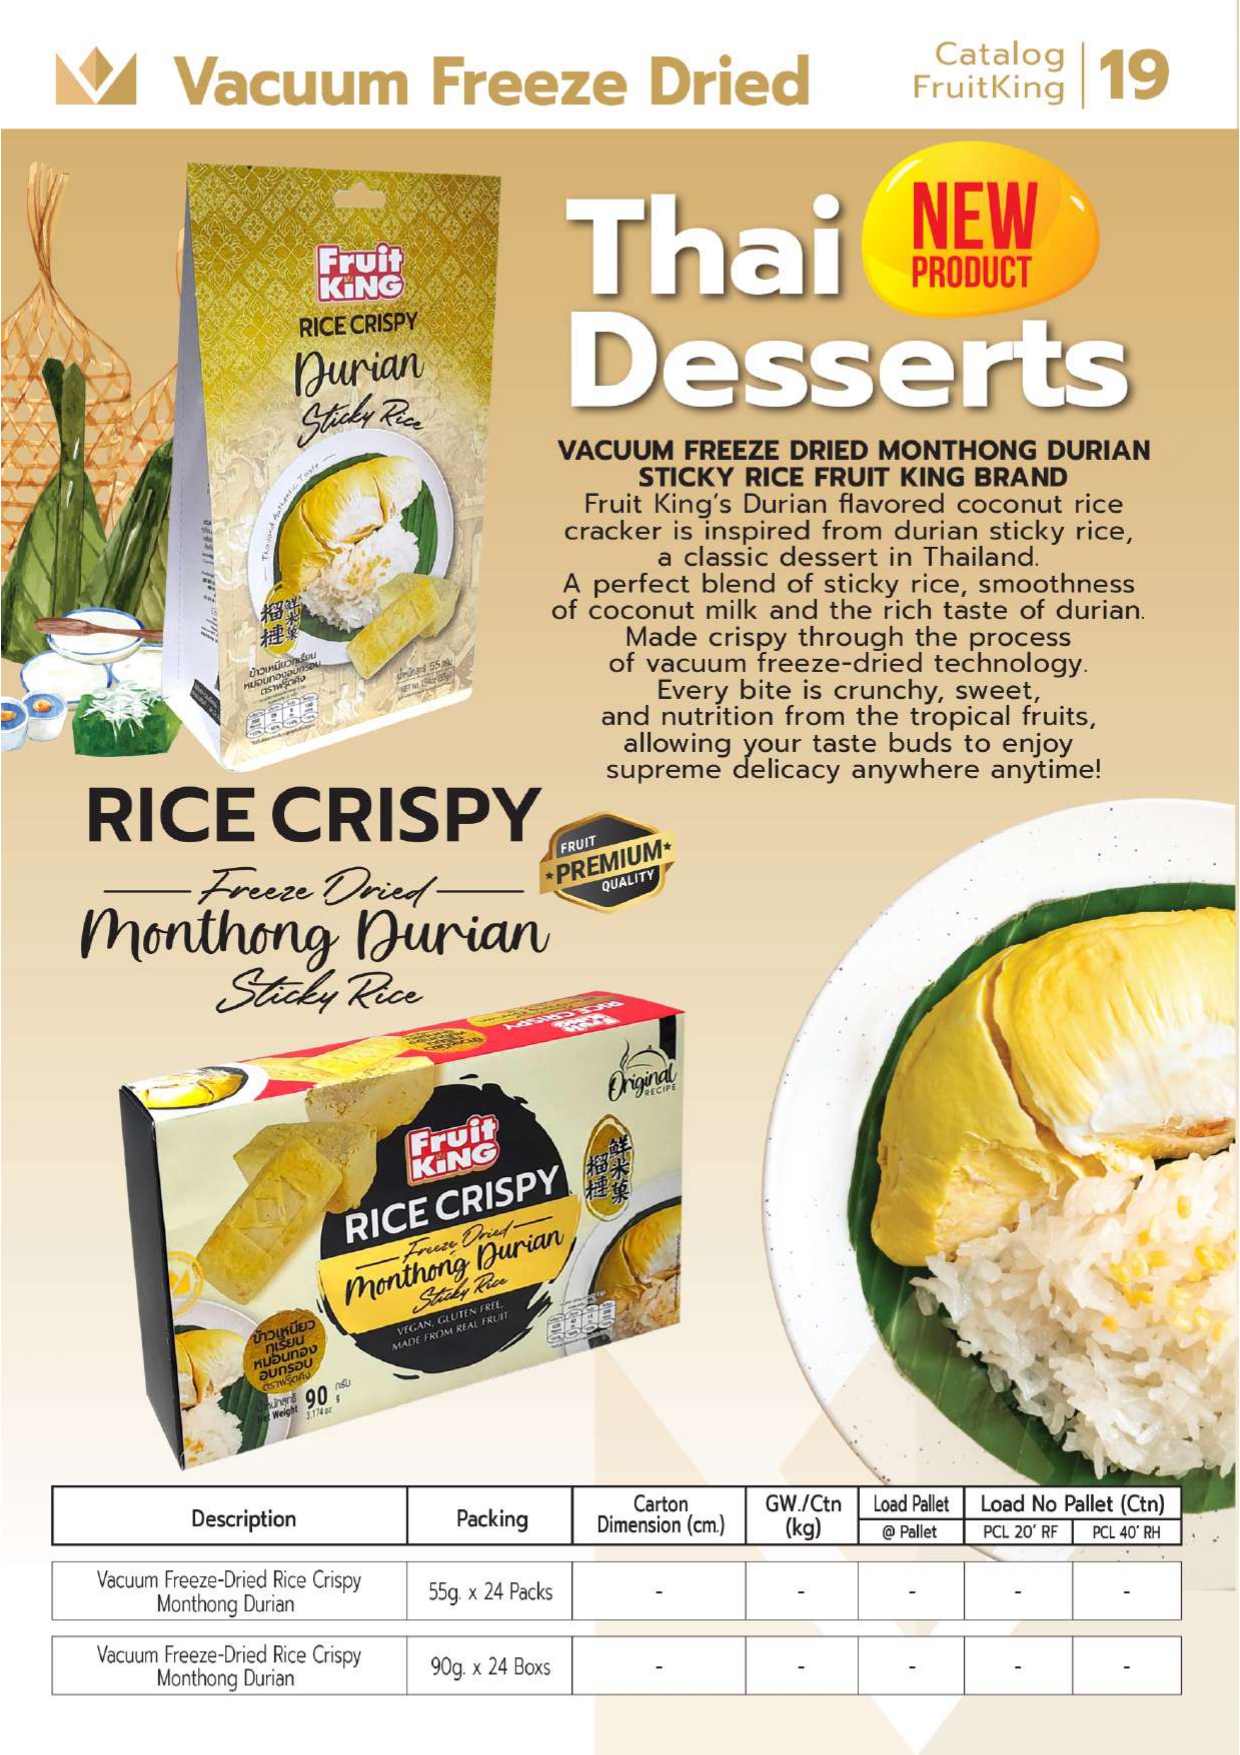 Vacuum Freeze-Dried Rice Crispy Durian